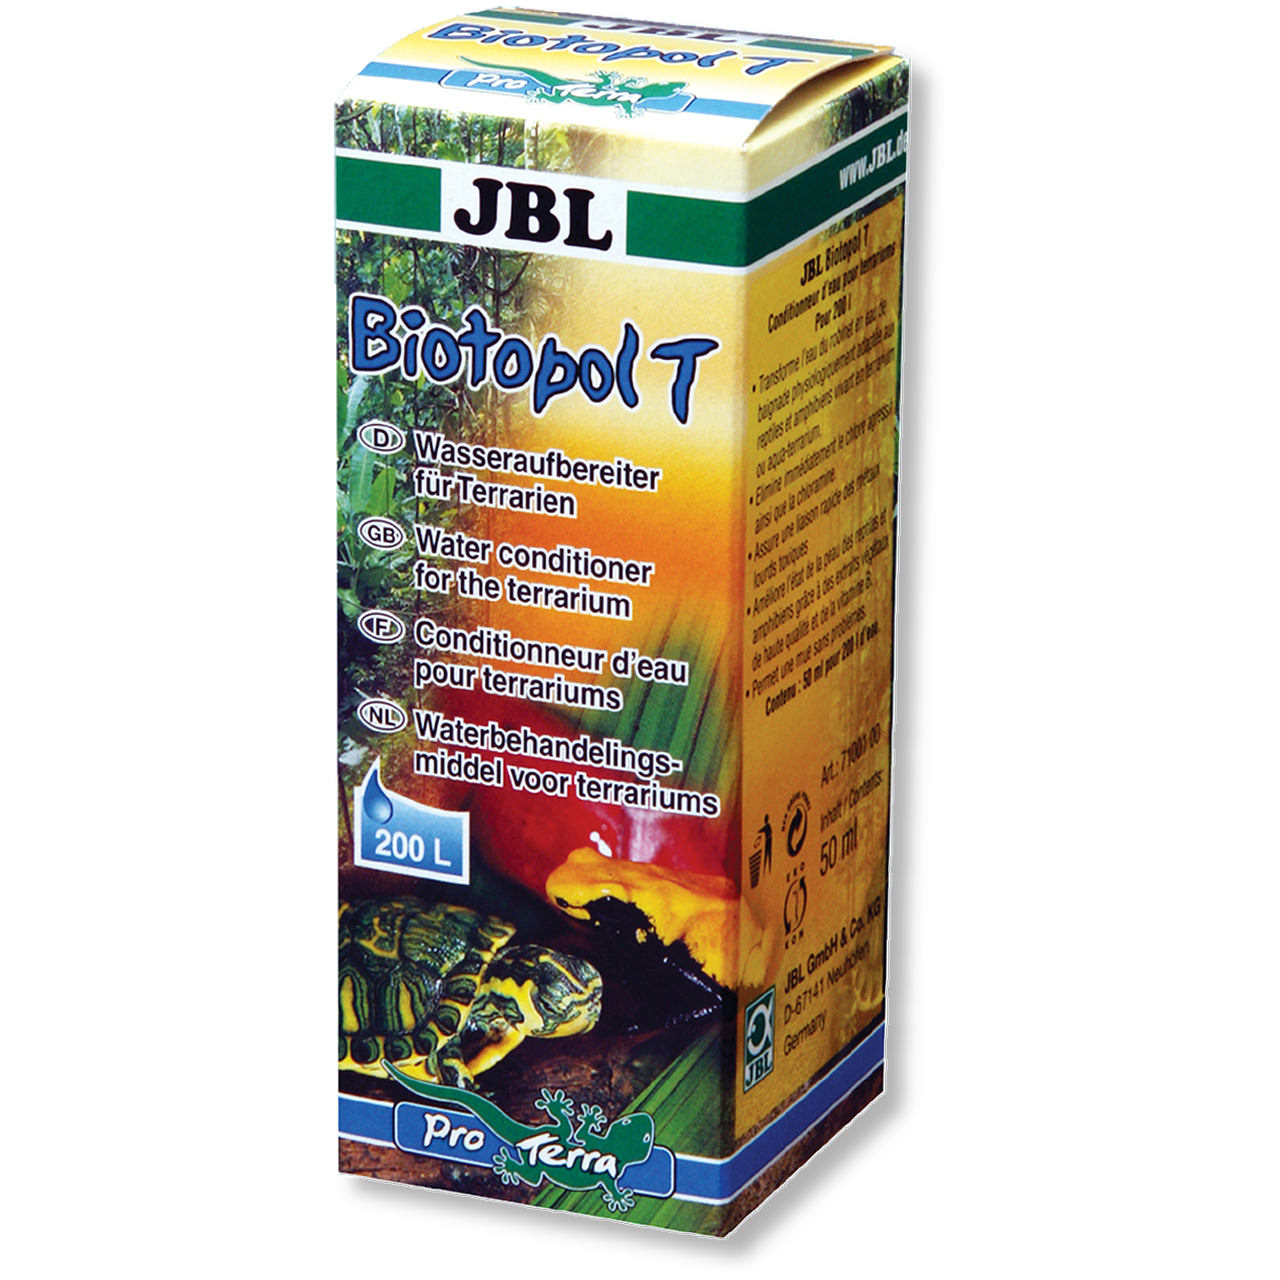 JBL Biotopol T